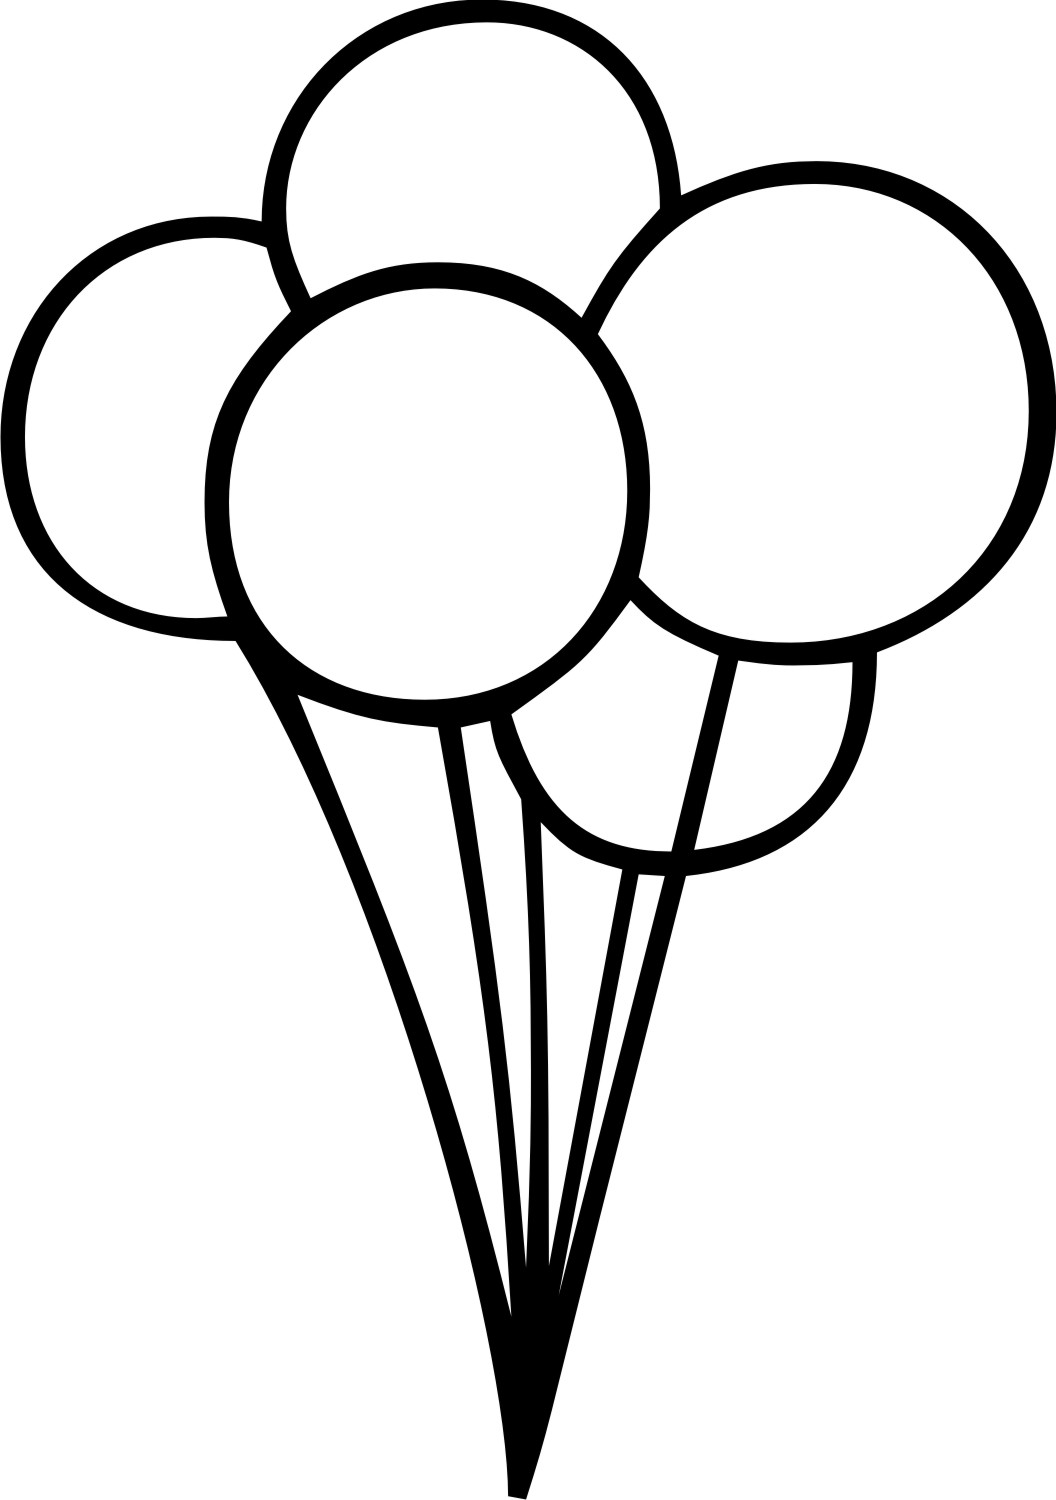 Pix For > White Balloon Clip Art